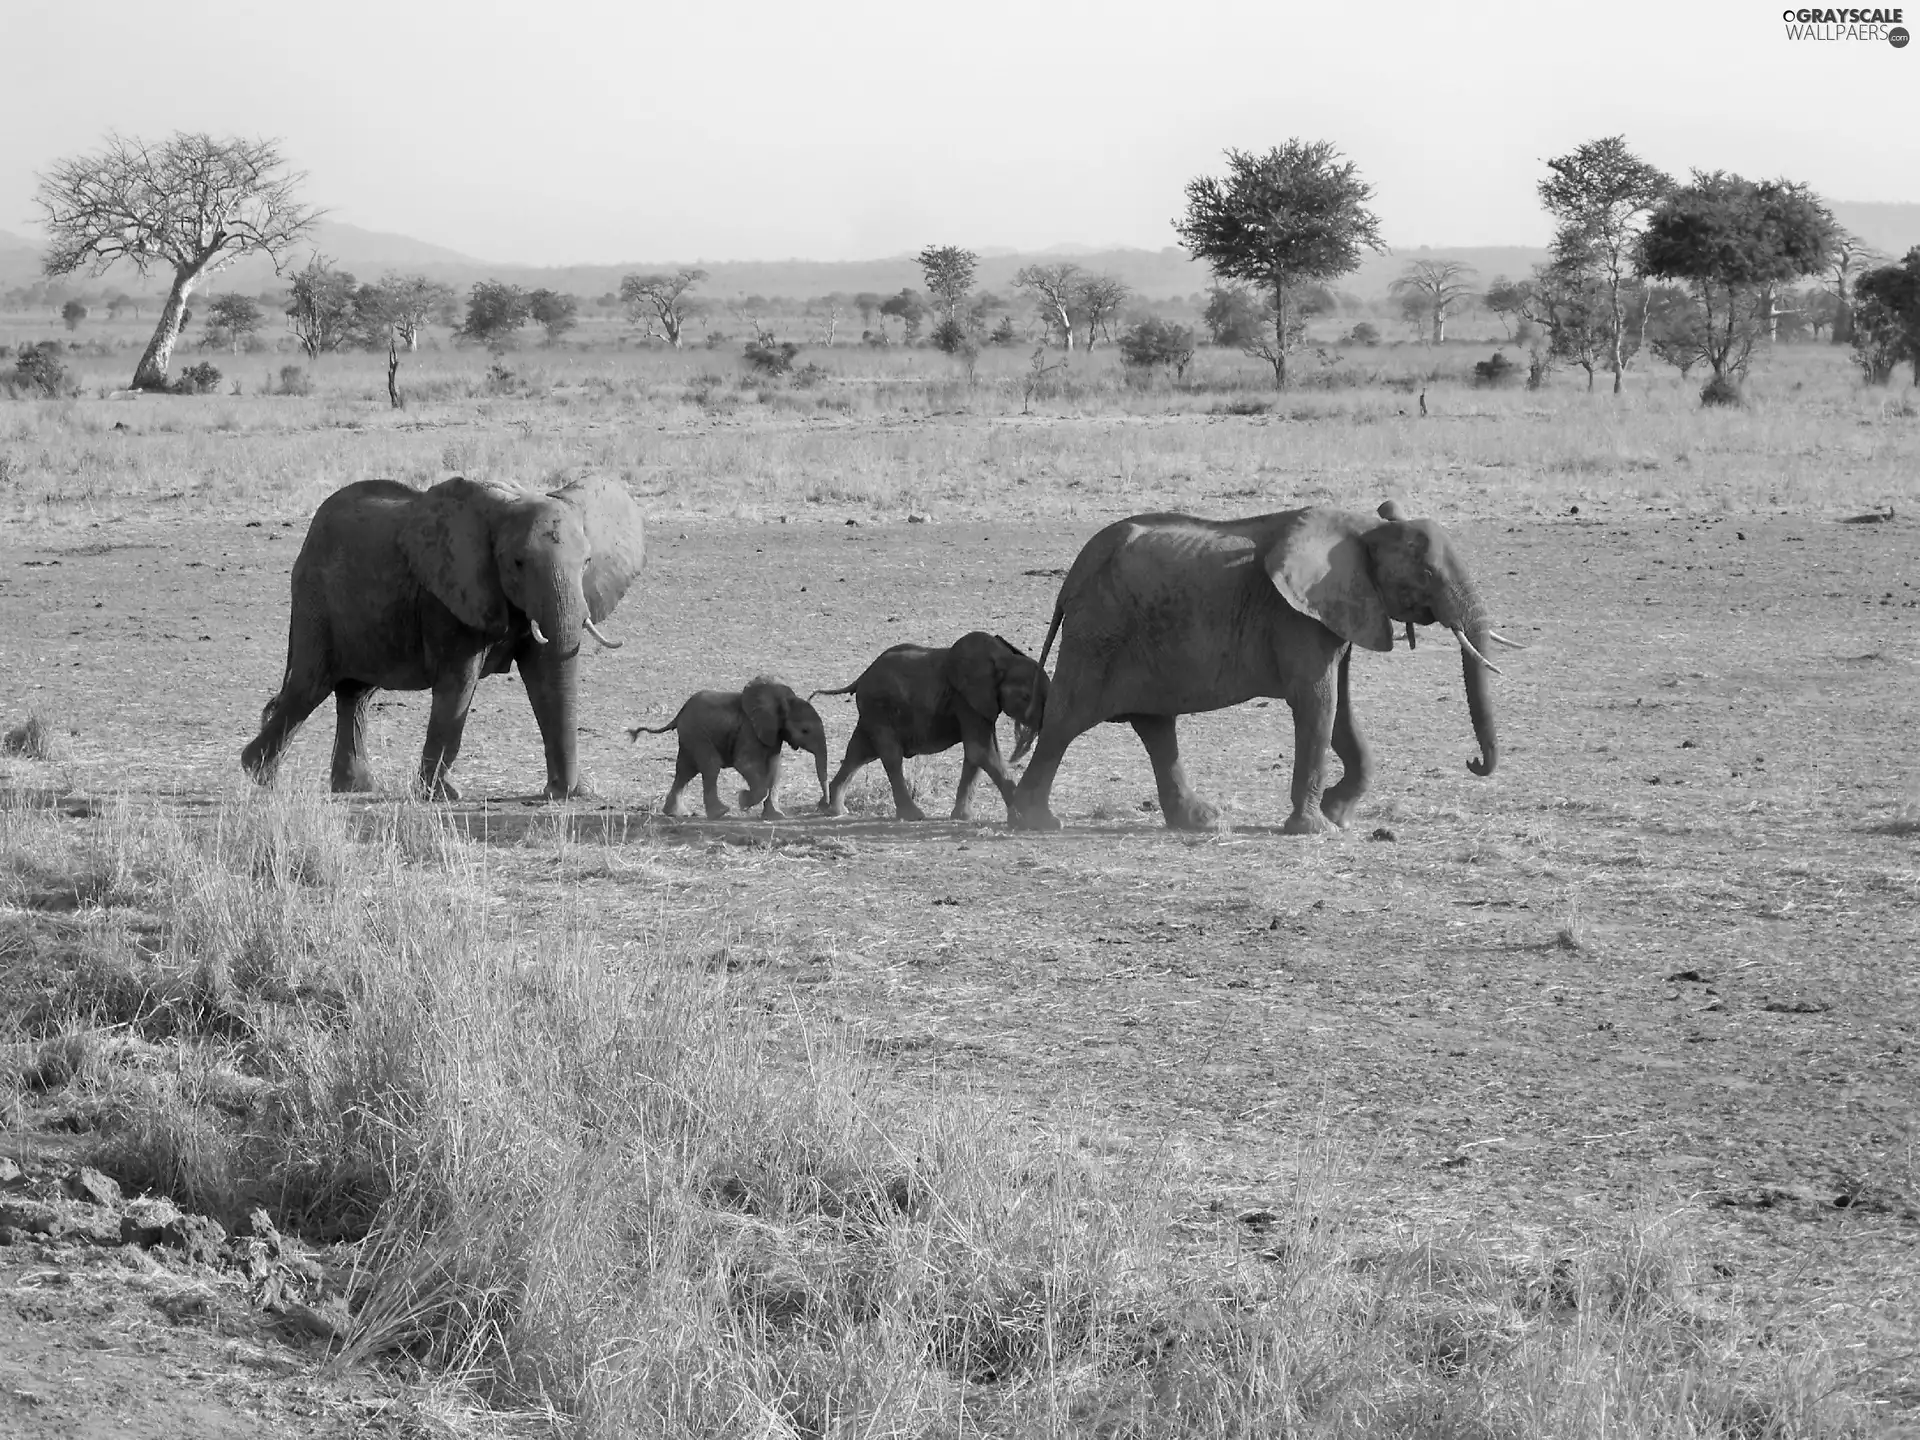 Family, elephants